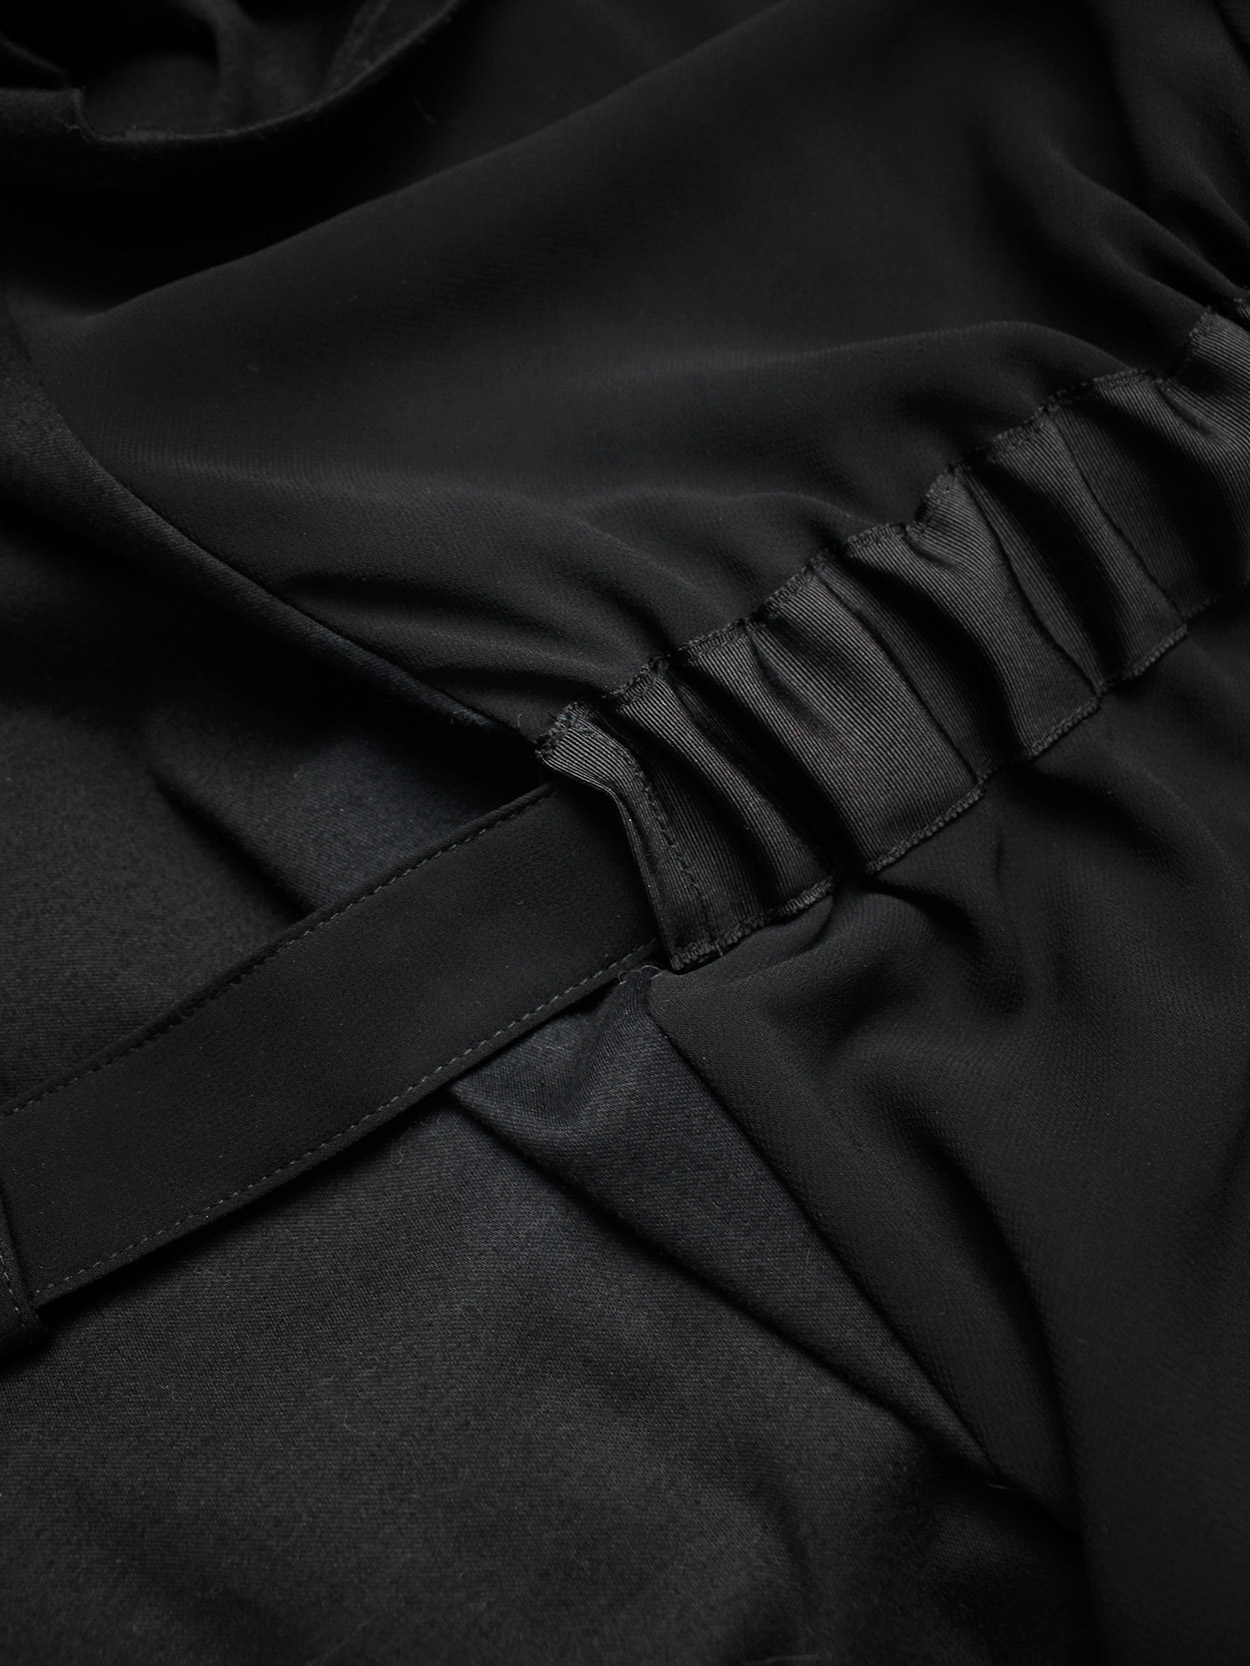 vaniitas vintage Noir Kei Ninomiya black gathered t-shirt with belt and sheer back 3787